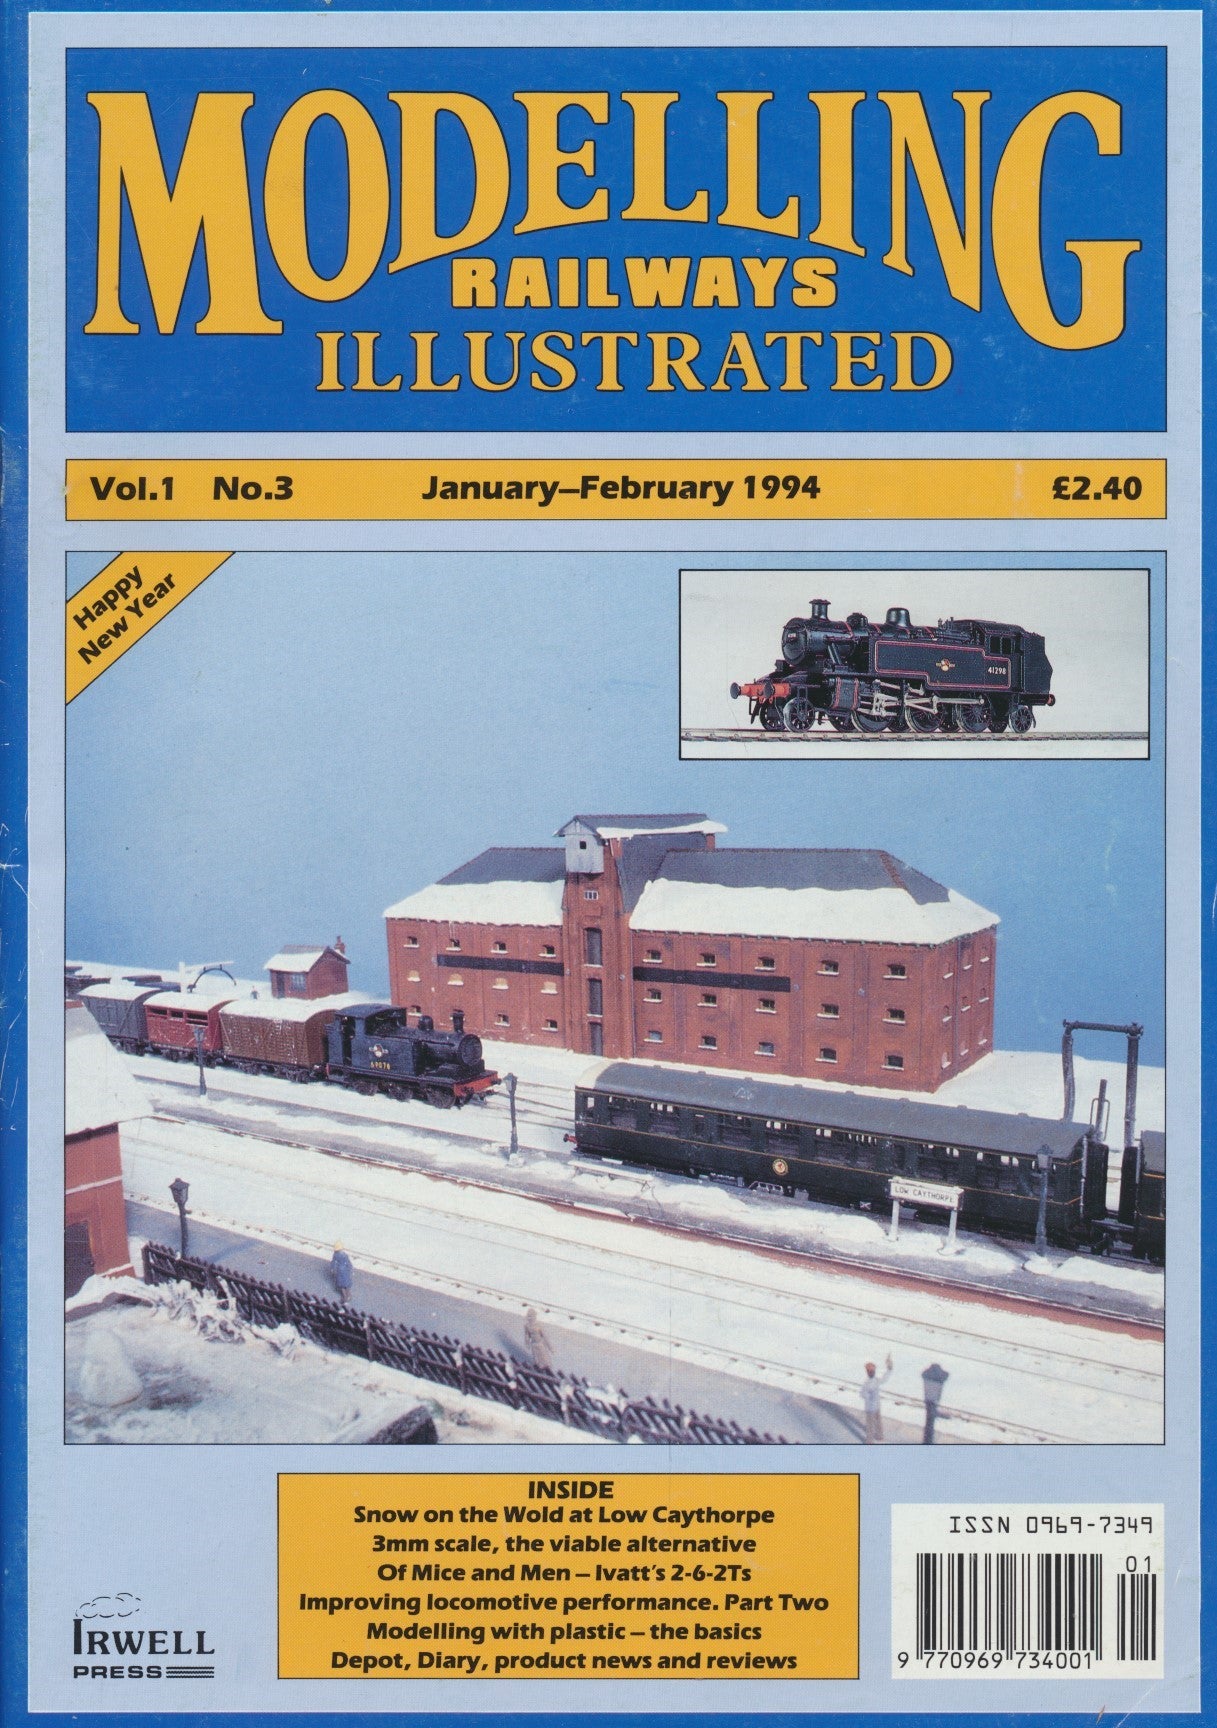 Modelling Railways Illustrated: Vol. 1 No. 3 - January-February 1994